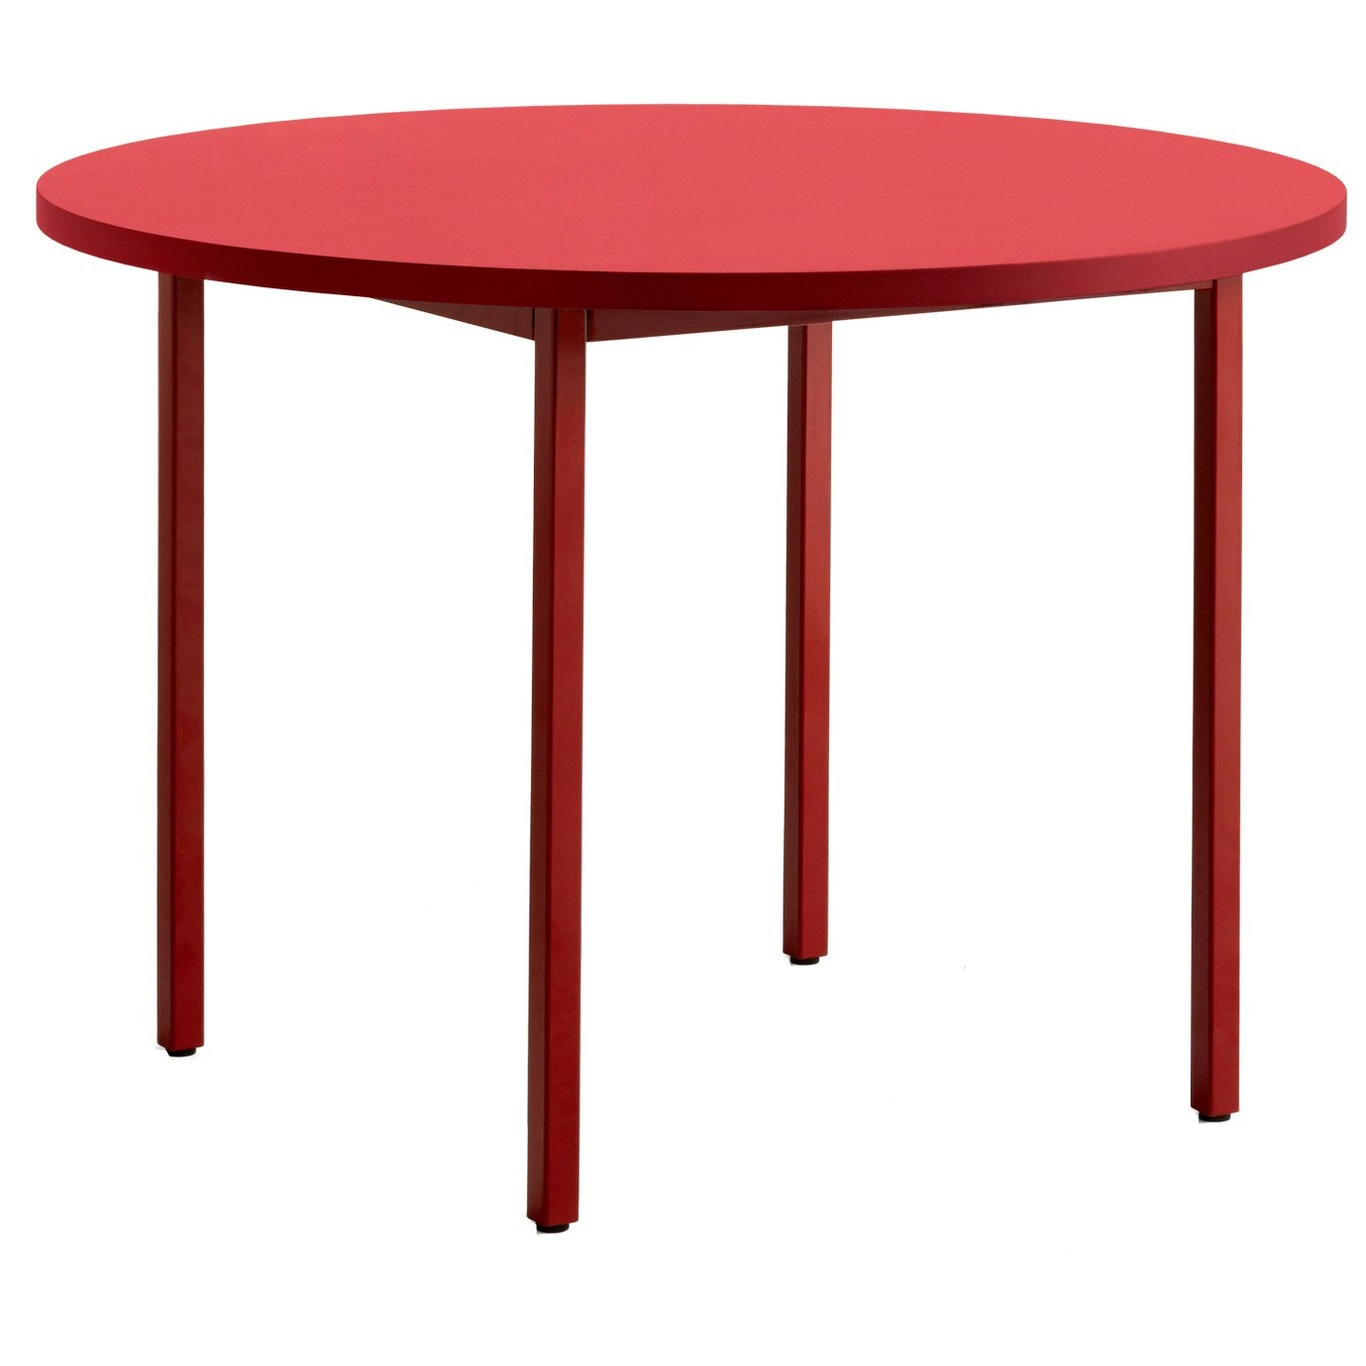 Two-Colour Tisch Ø105 cm, Weinrot / Rot